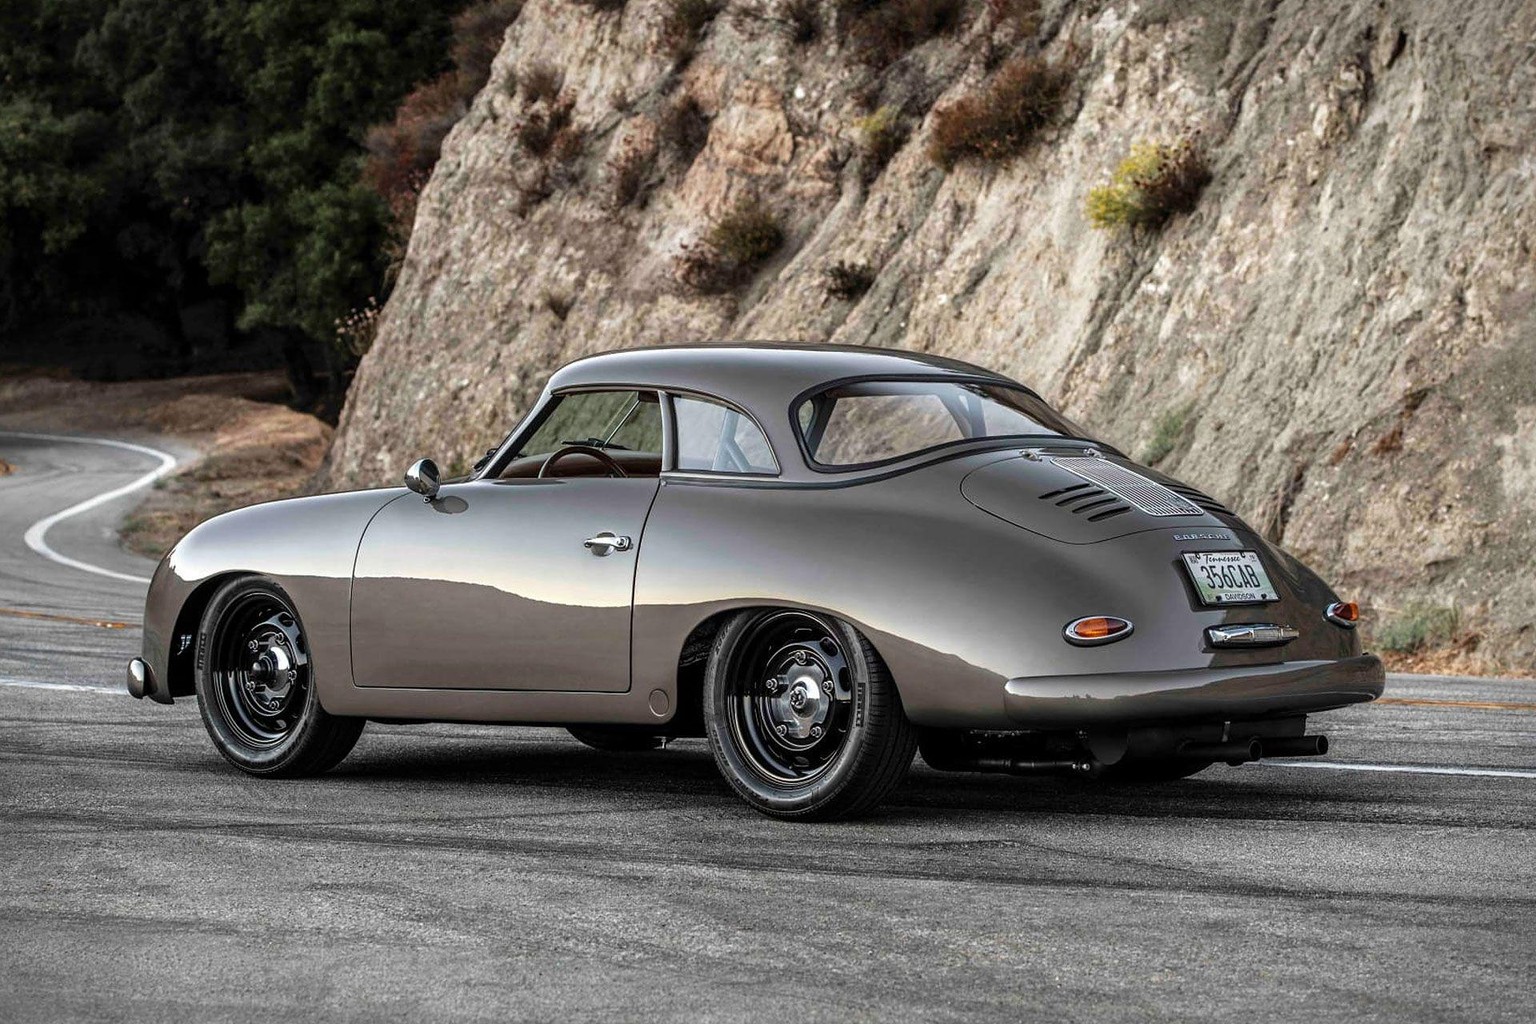 emory motorsports the 356 outlaws porsche kalifornien retro oldtimer restomod auto https://www.emorymotorsports.com/our-cars/